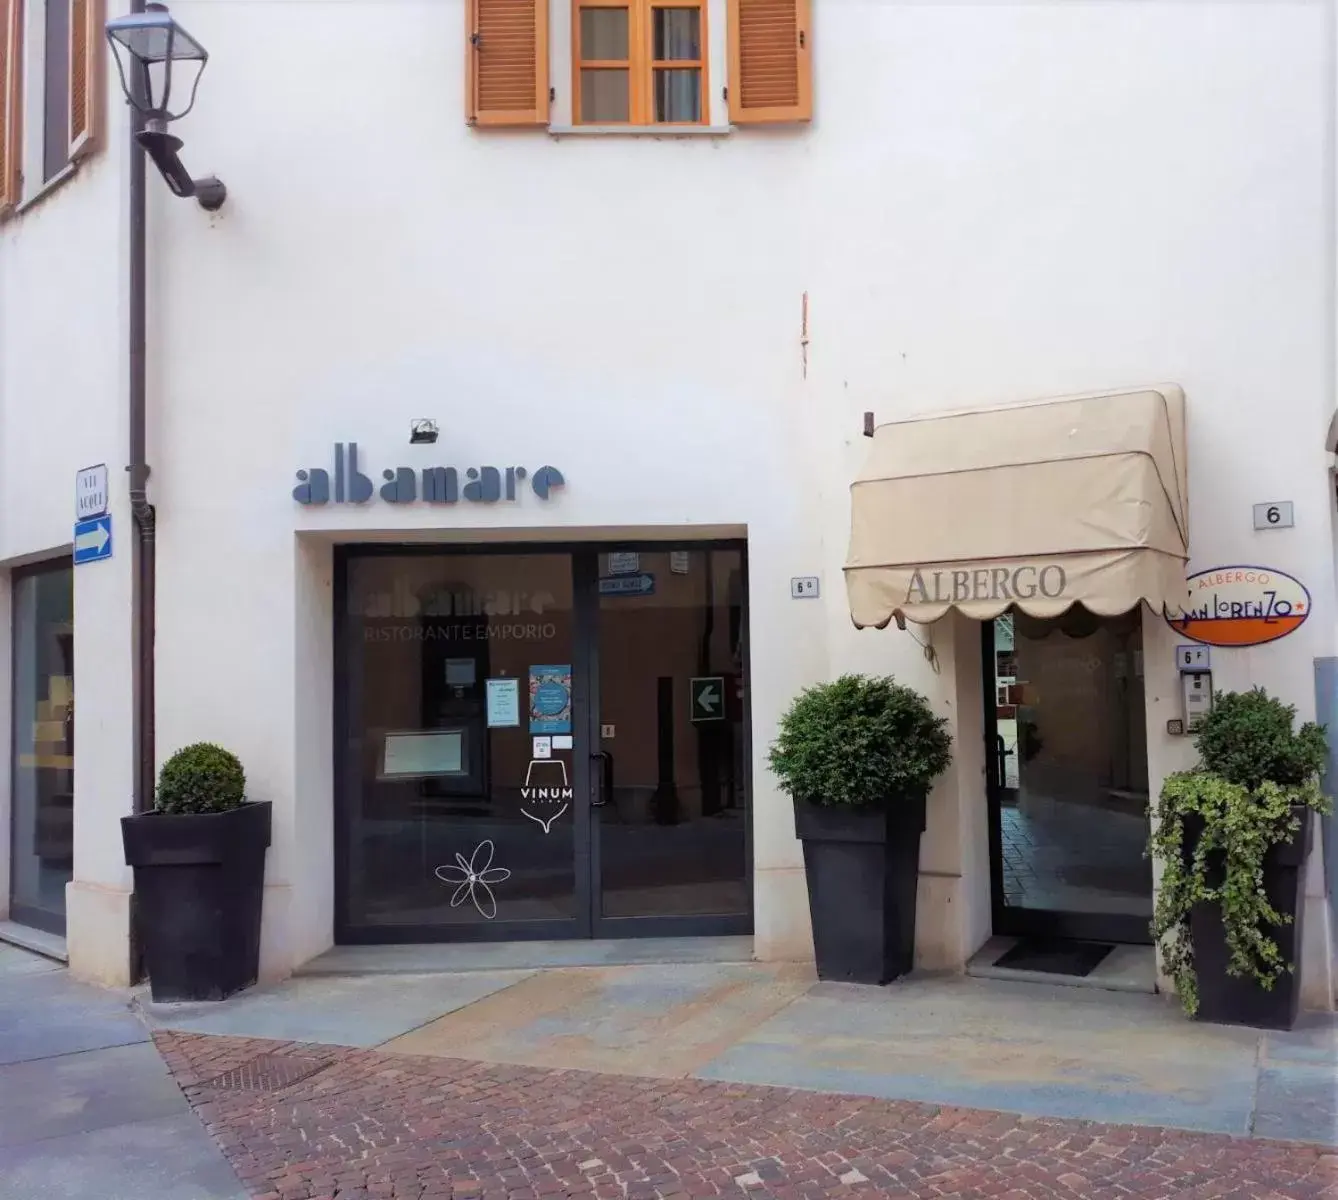 Restaurant/places to eat in Albergo San Lorenzo